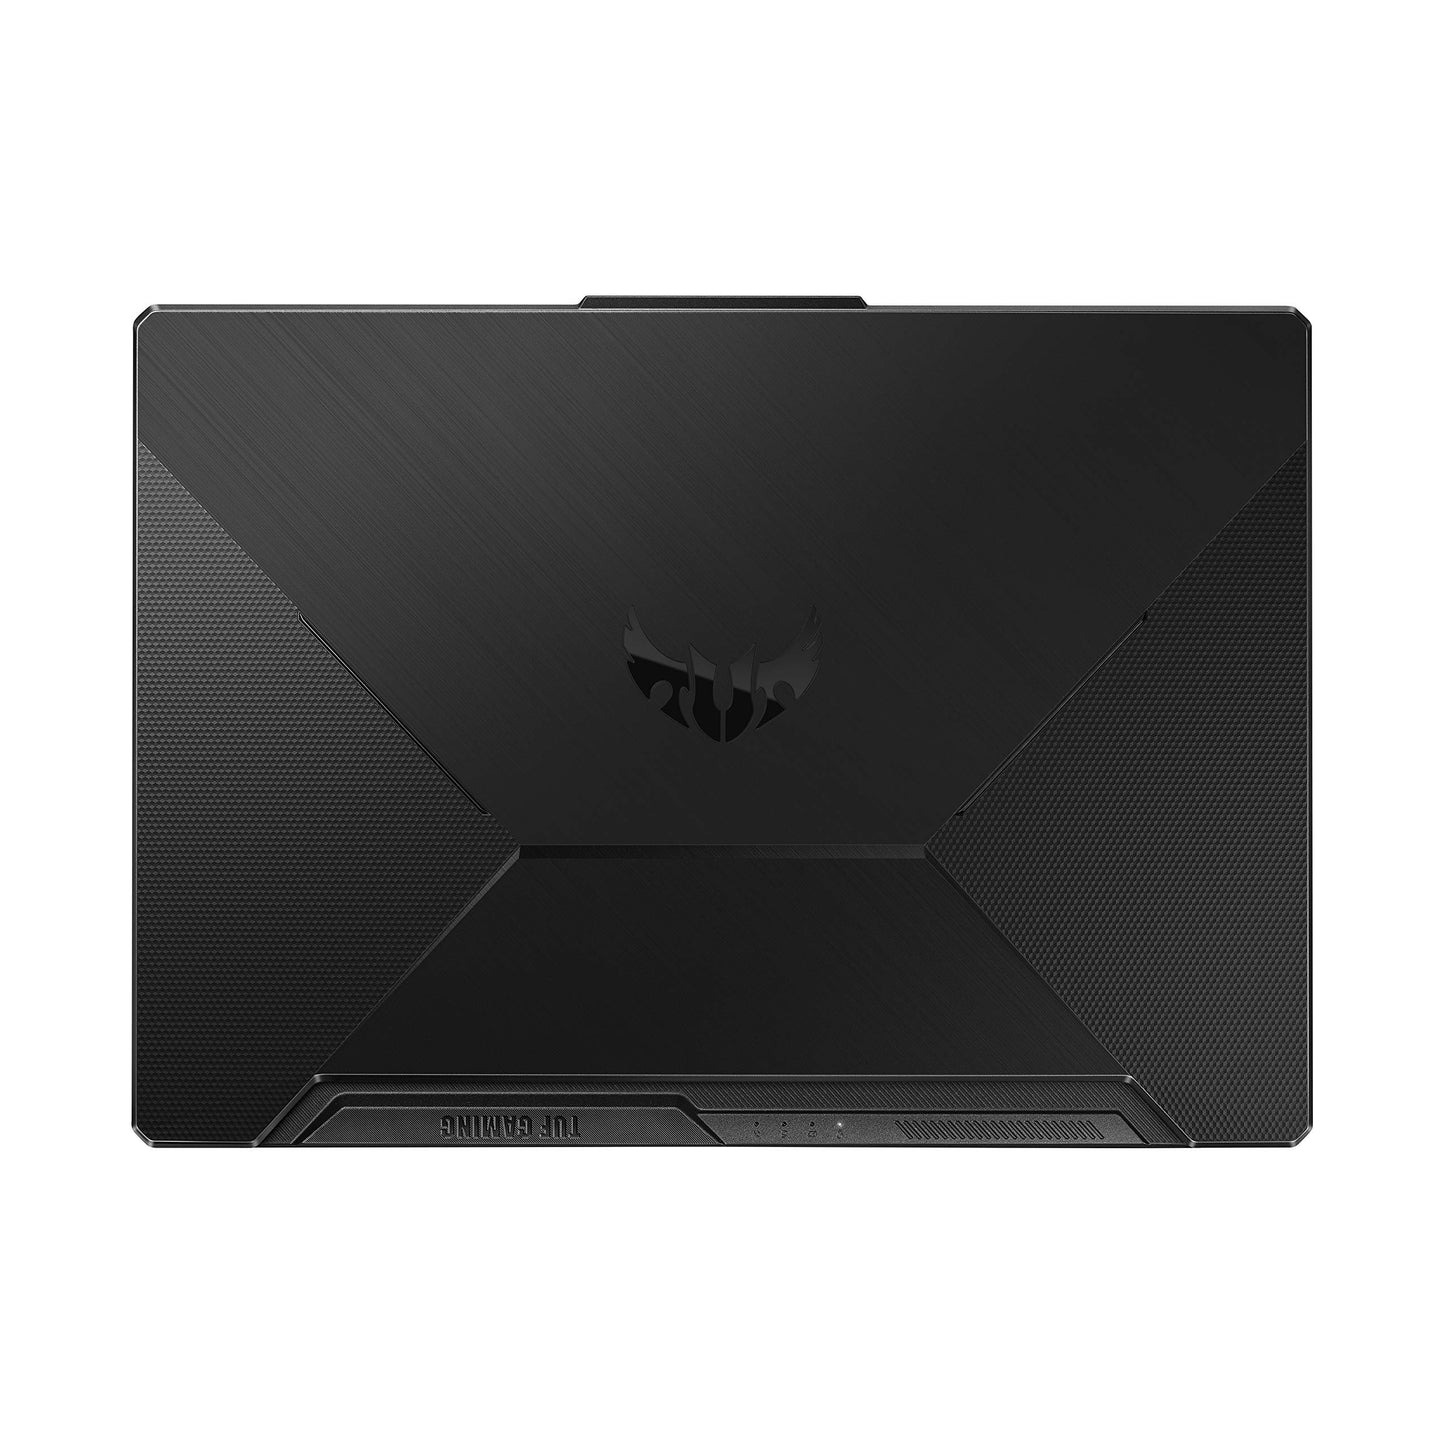 ASUS TUF Gaming A15 Gaming Laptop, 15.6” 144Hz FHD IPS-Type, AMD Ryzen 5 4600H, GeForce GTX 1650, 8GB DDR4, 512GB PCIe SSD, Gigabit Wi-Fi 5, Windows 10 Home, FA506IH-AS53